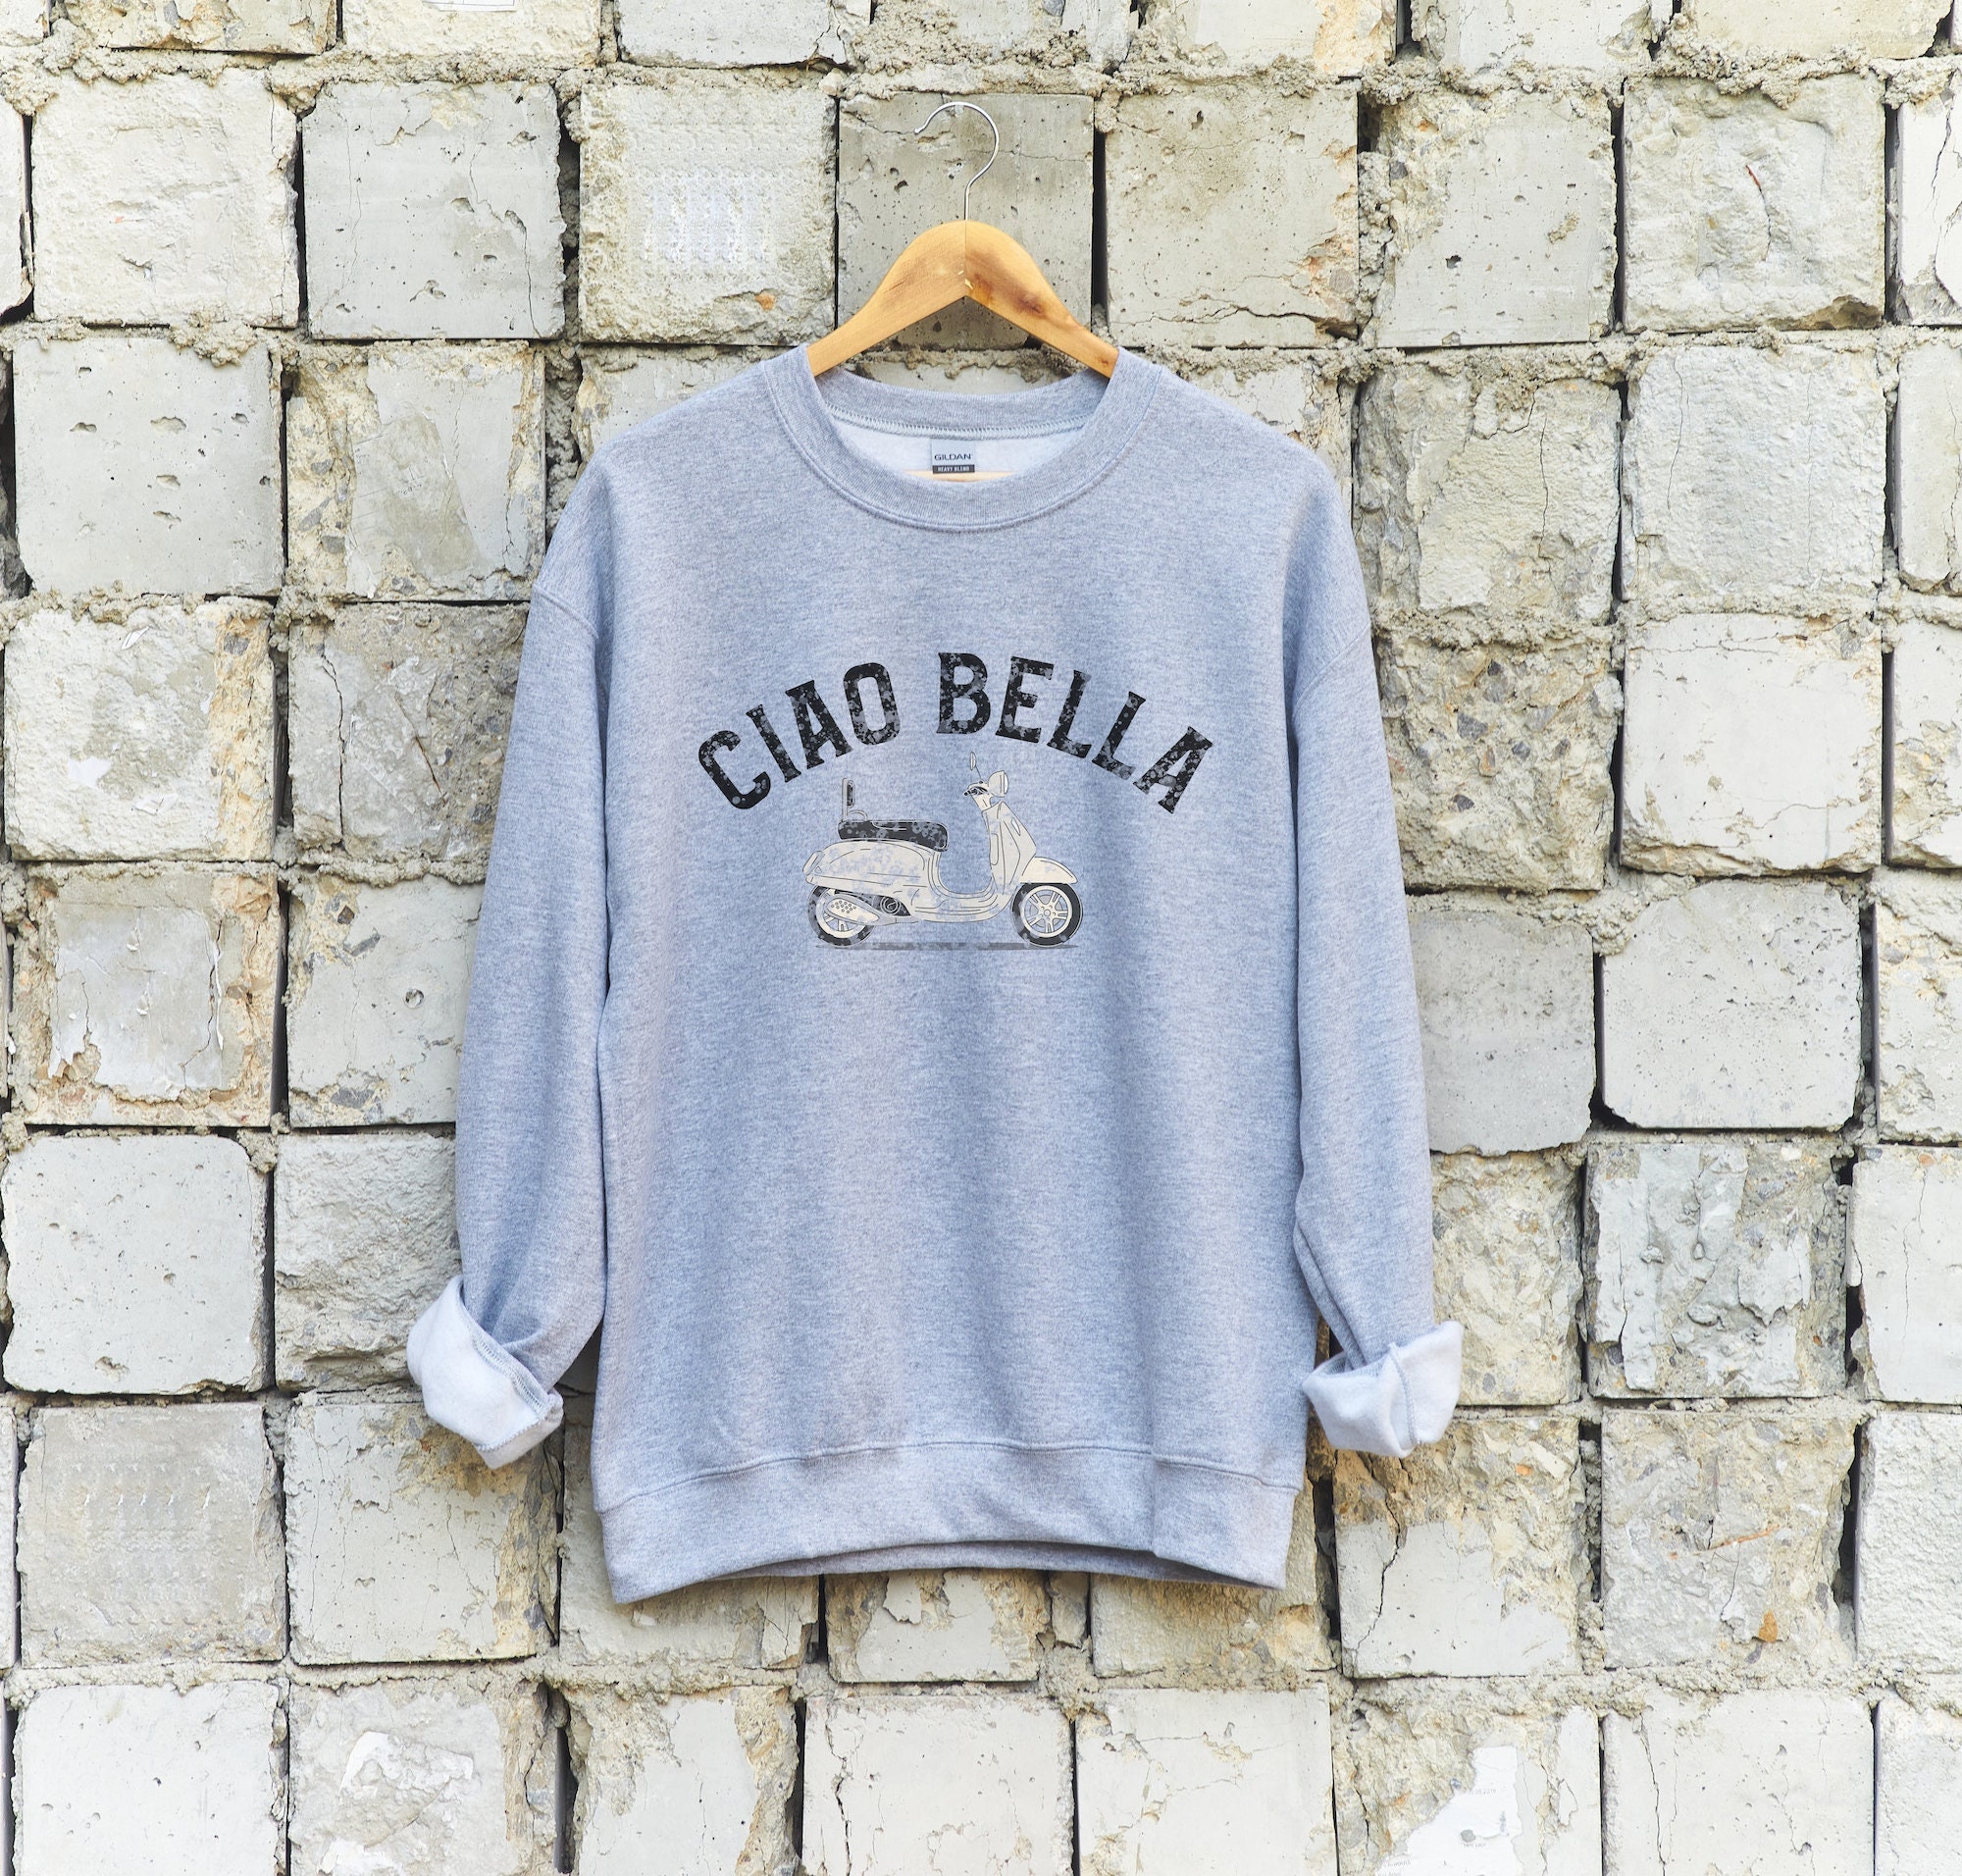 Ciao Bella Crewneck Sweatshirt, Cute Italian Vespa Crewneck Sweatshirt With Vintage Vibe